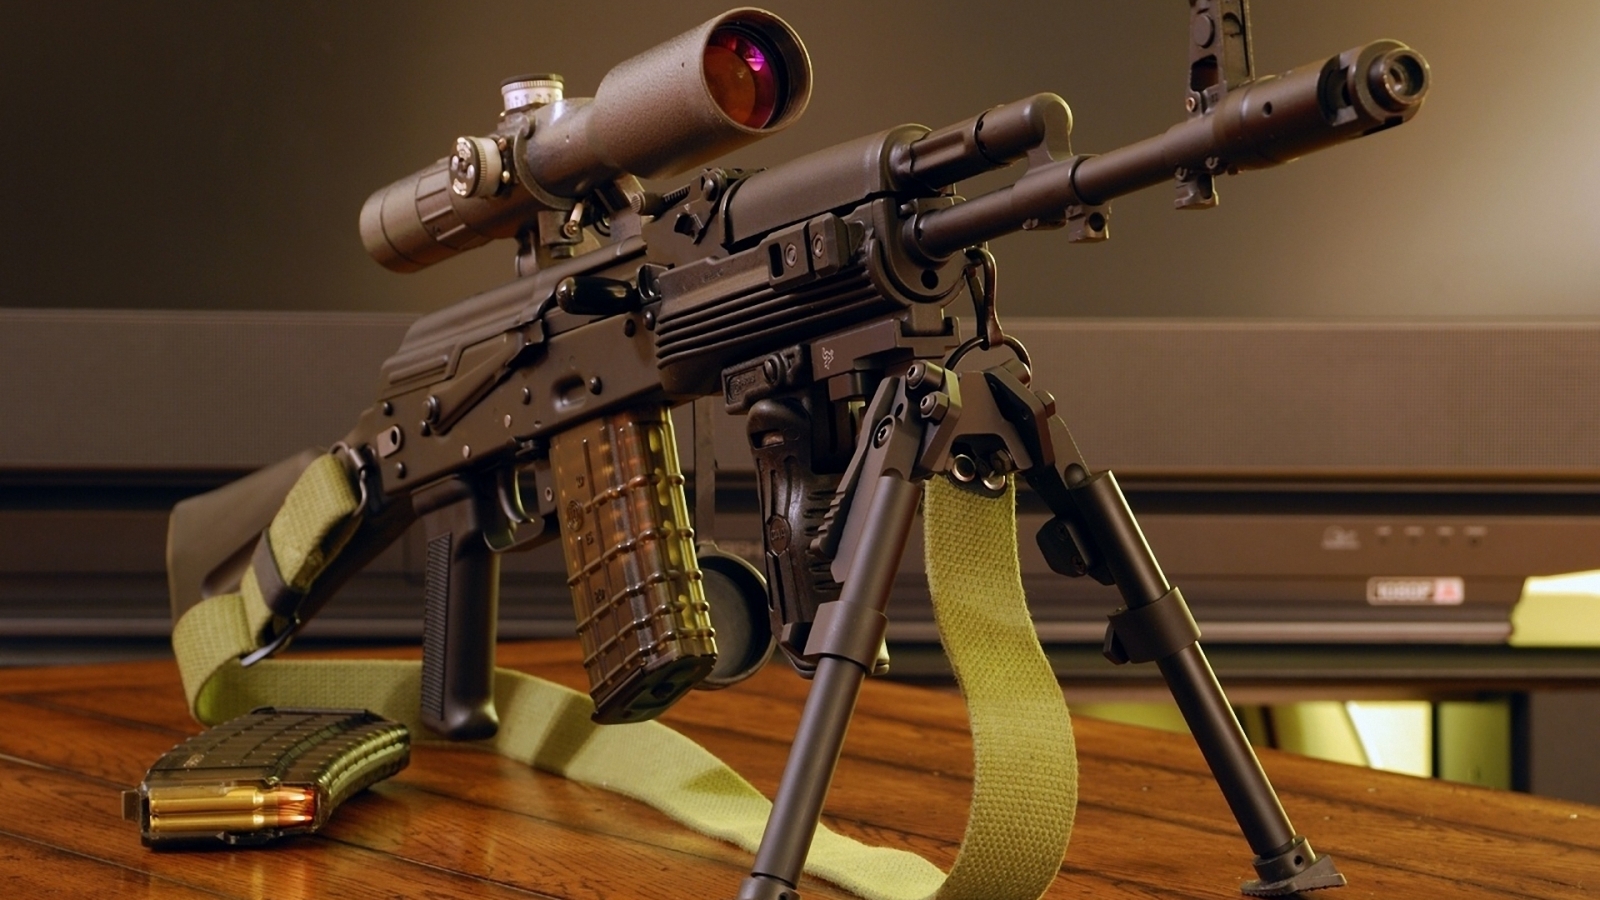 Automatic Gun AK-101 for 1600 x 900 HDTV resolution